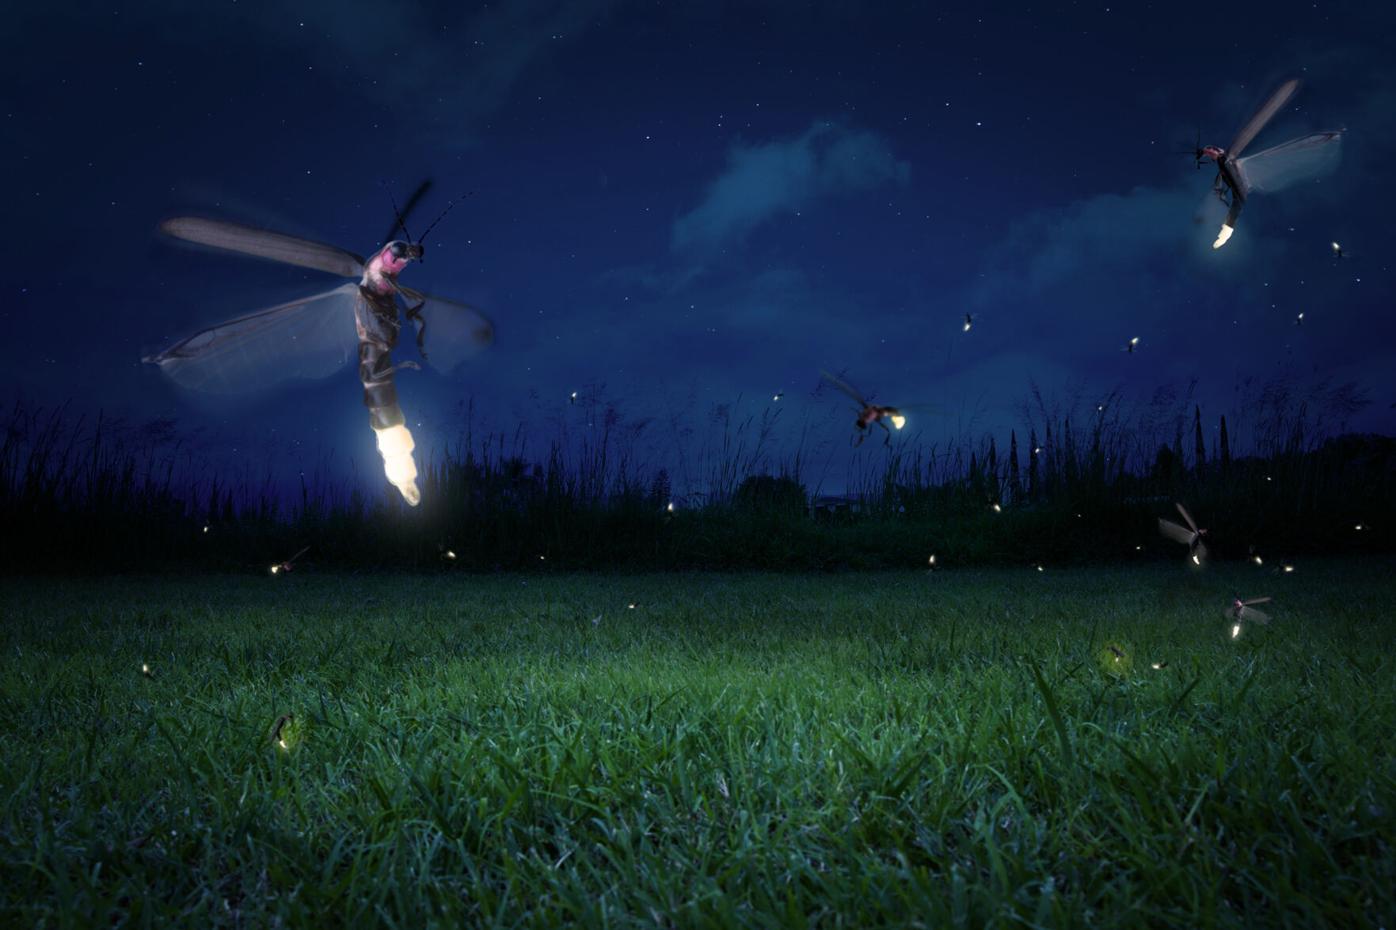 real fireflies